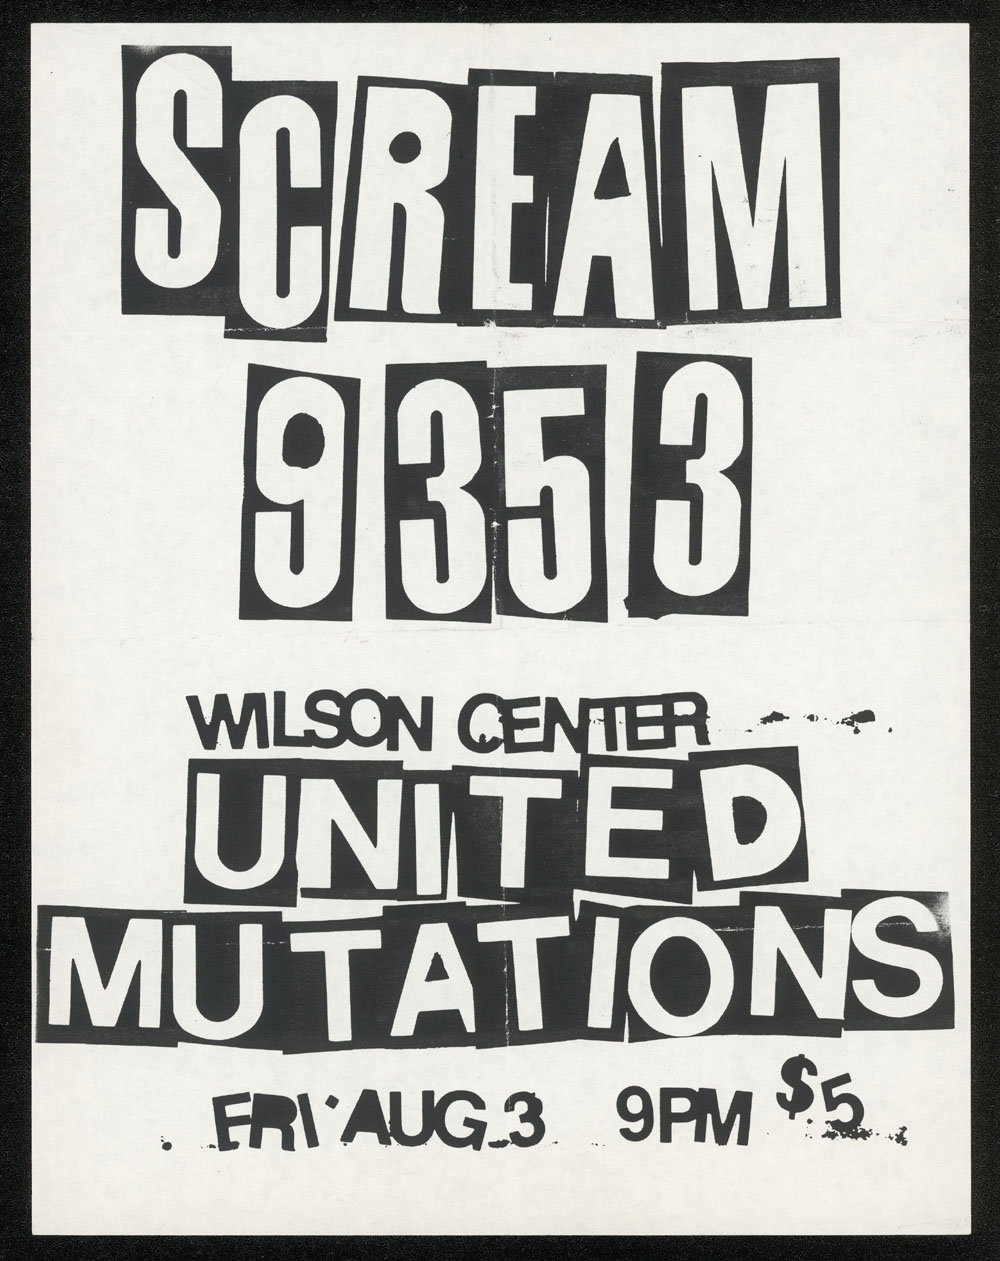 SCREAM w/ 9353, United Mutation at Wilson Center